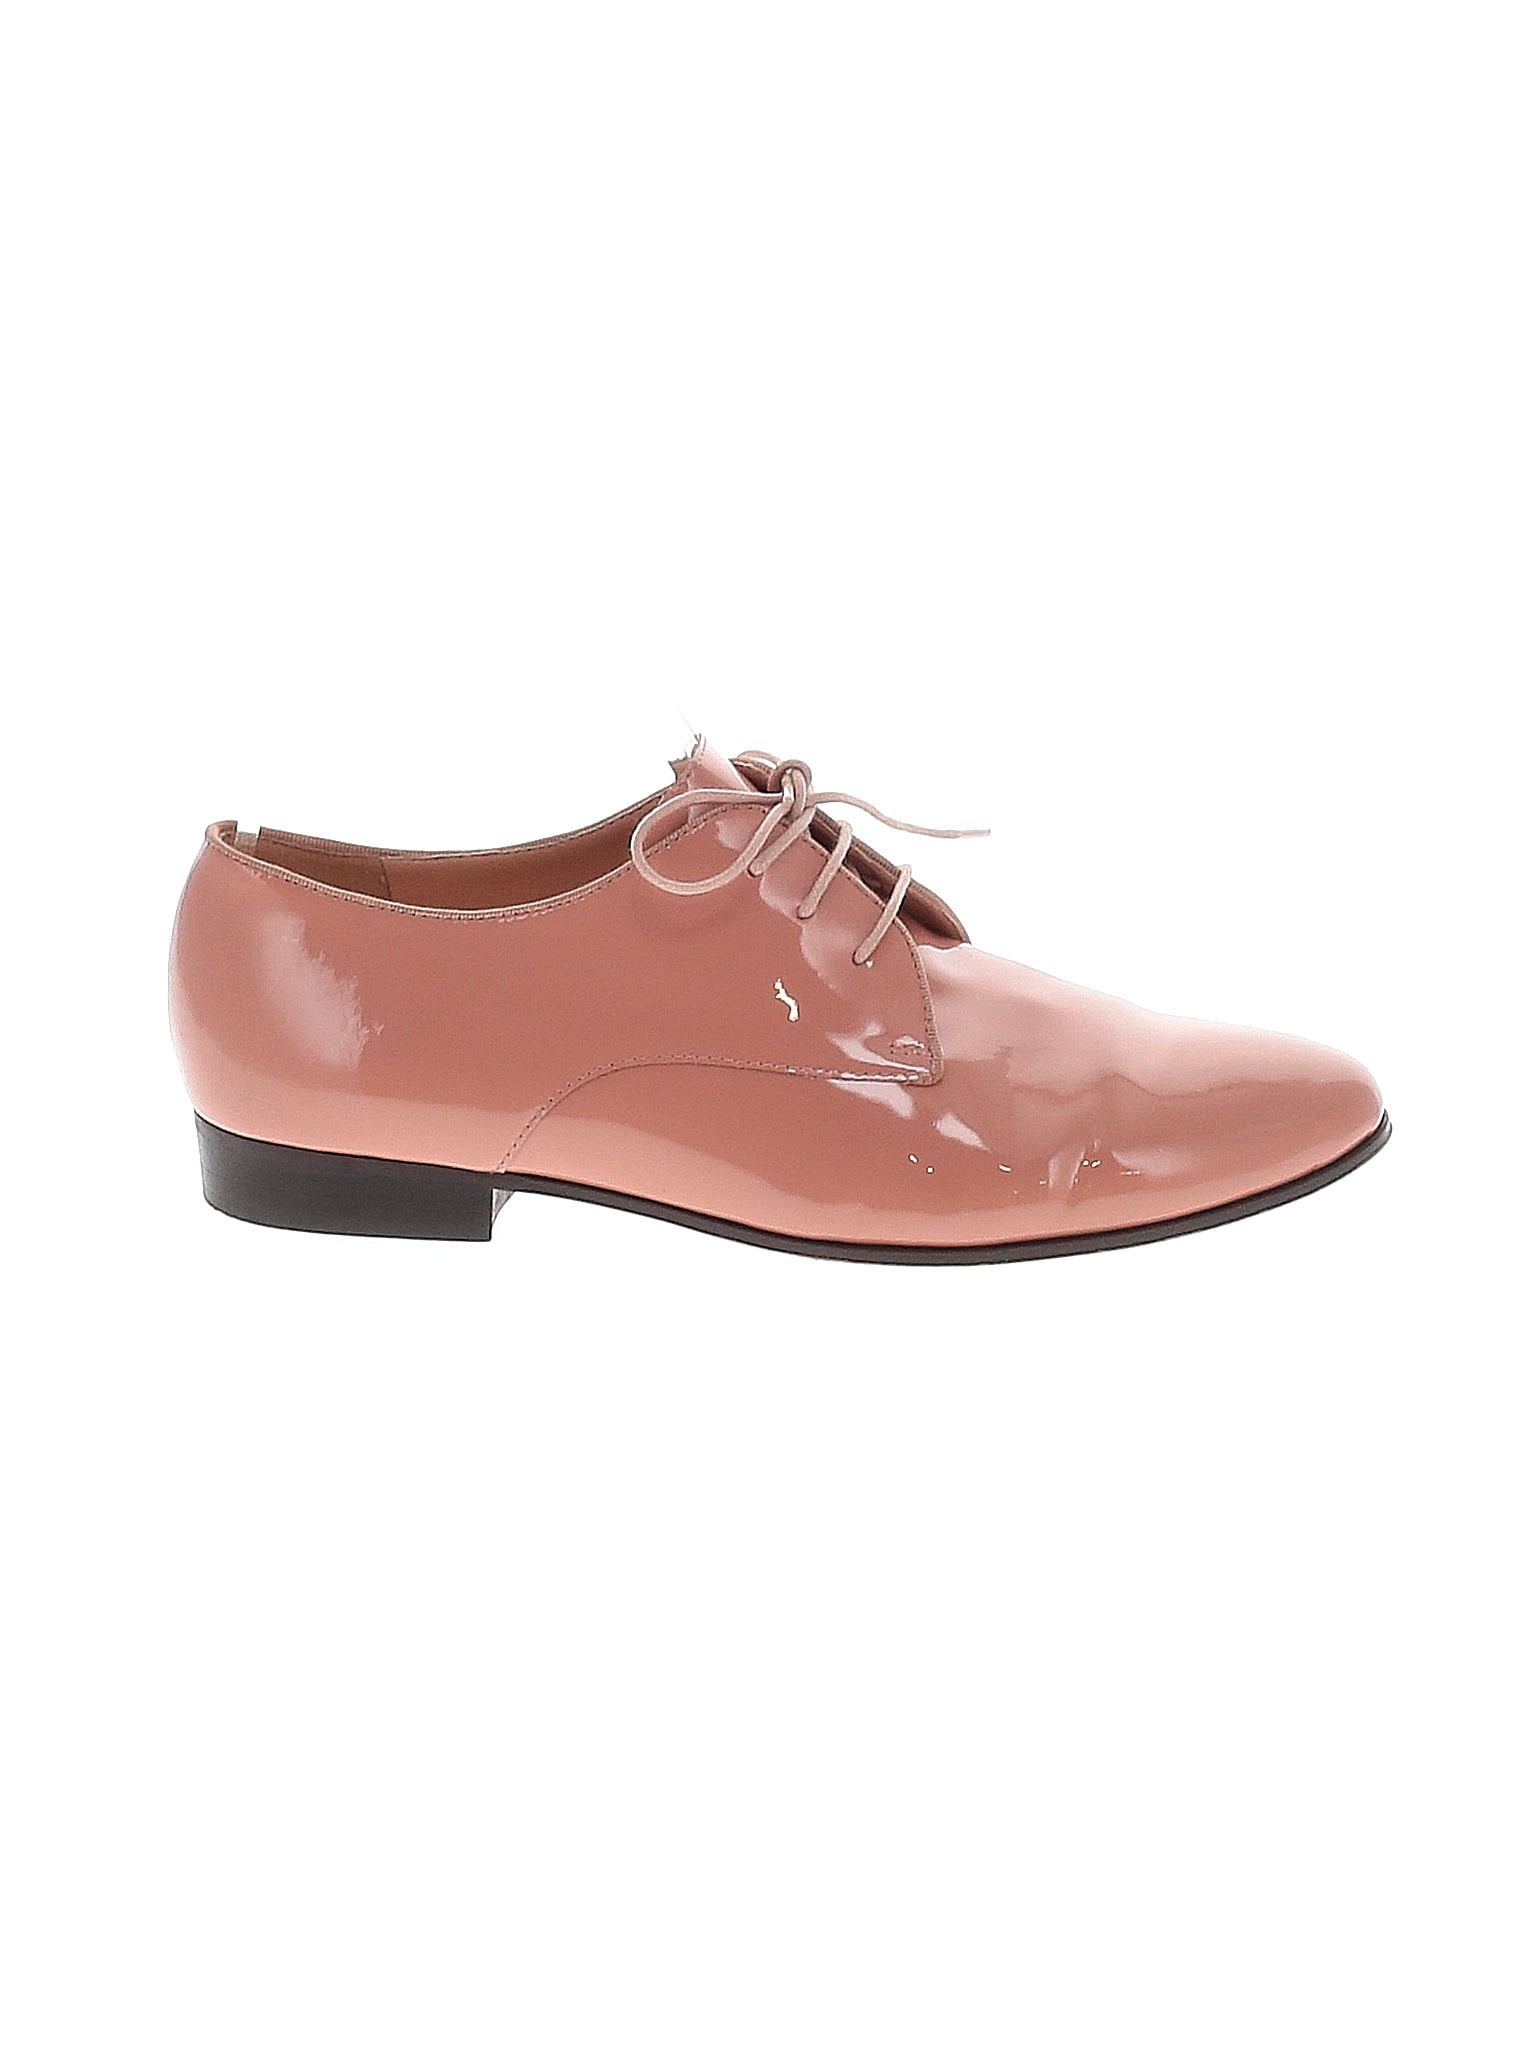 J.Crew Solid Pink Flats Size 8 - 75% off | thredUP